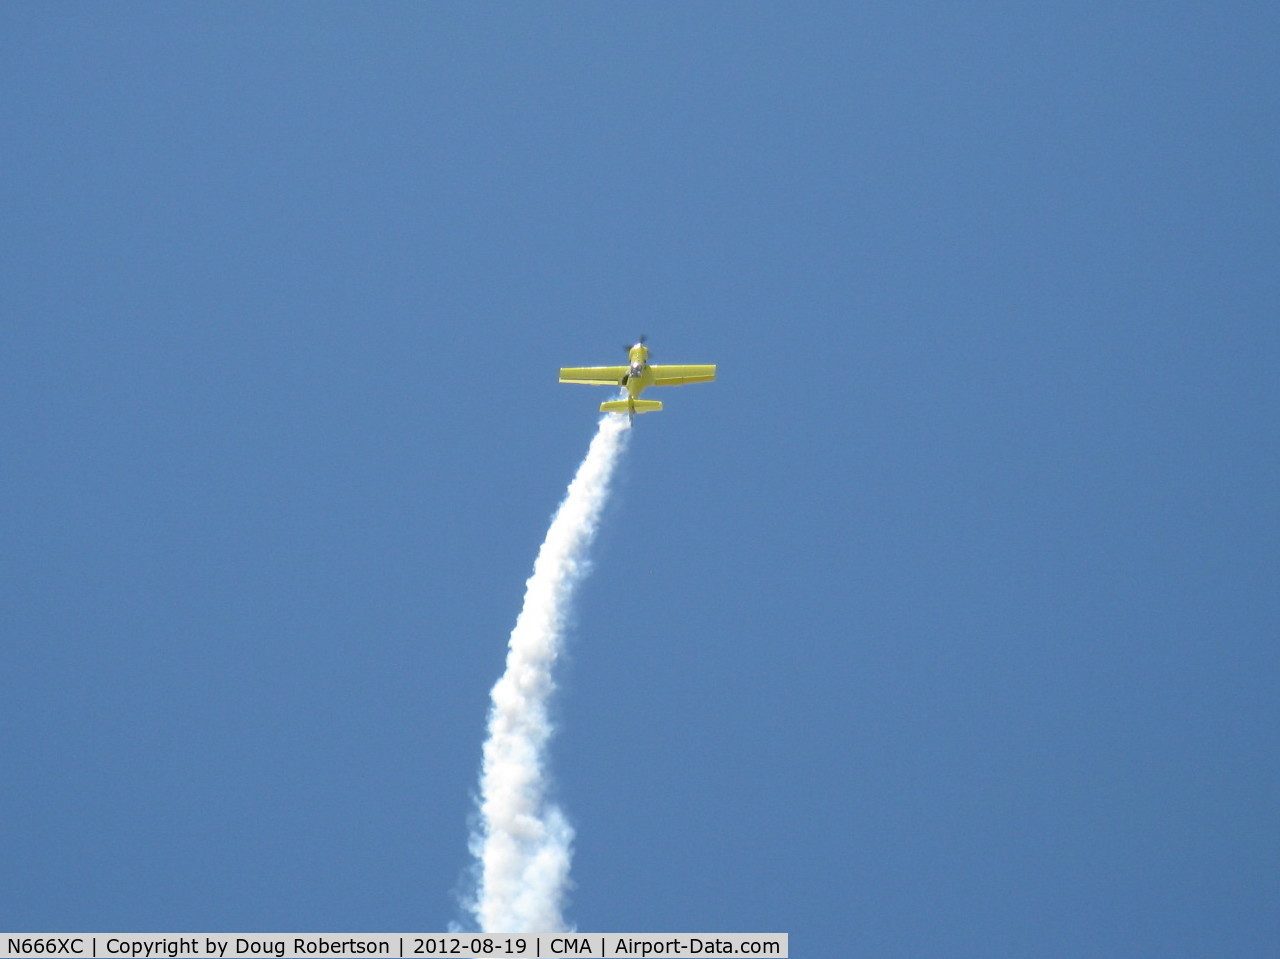 N666XC, 1997 Zlin Z-50LS C/N 0077, 1997 Moravan ZLIN Z50 LS 'Tumbling Bear', Lycoming IO-540 260 Hp, aerobatic act with smoke